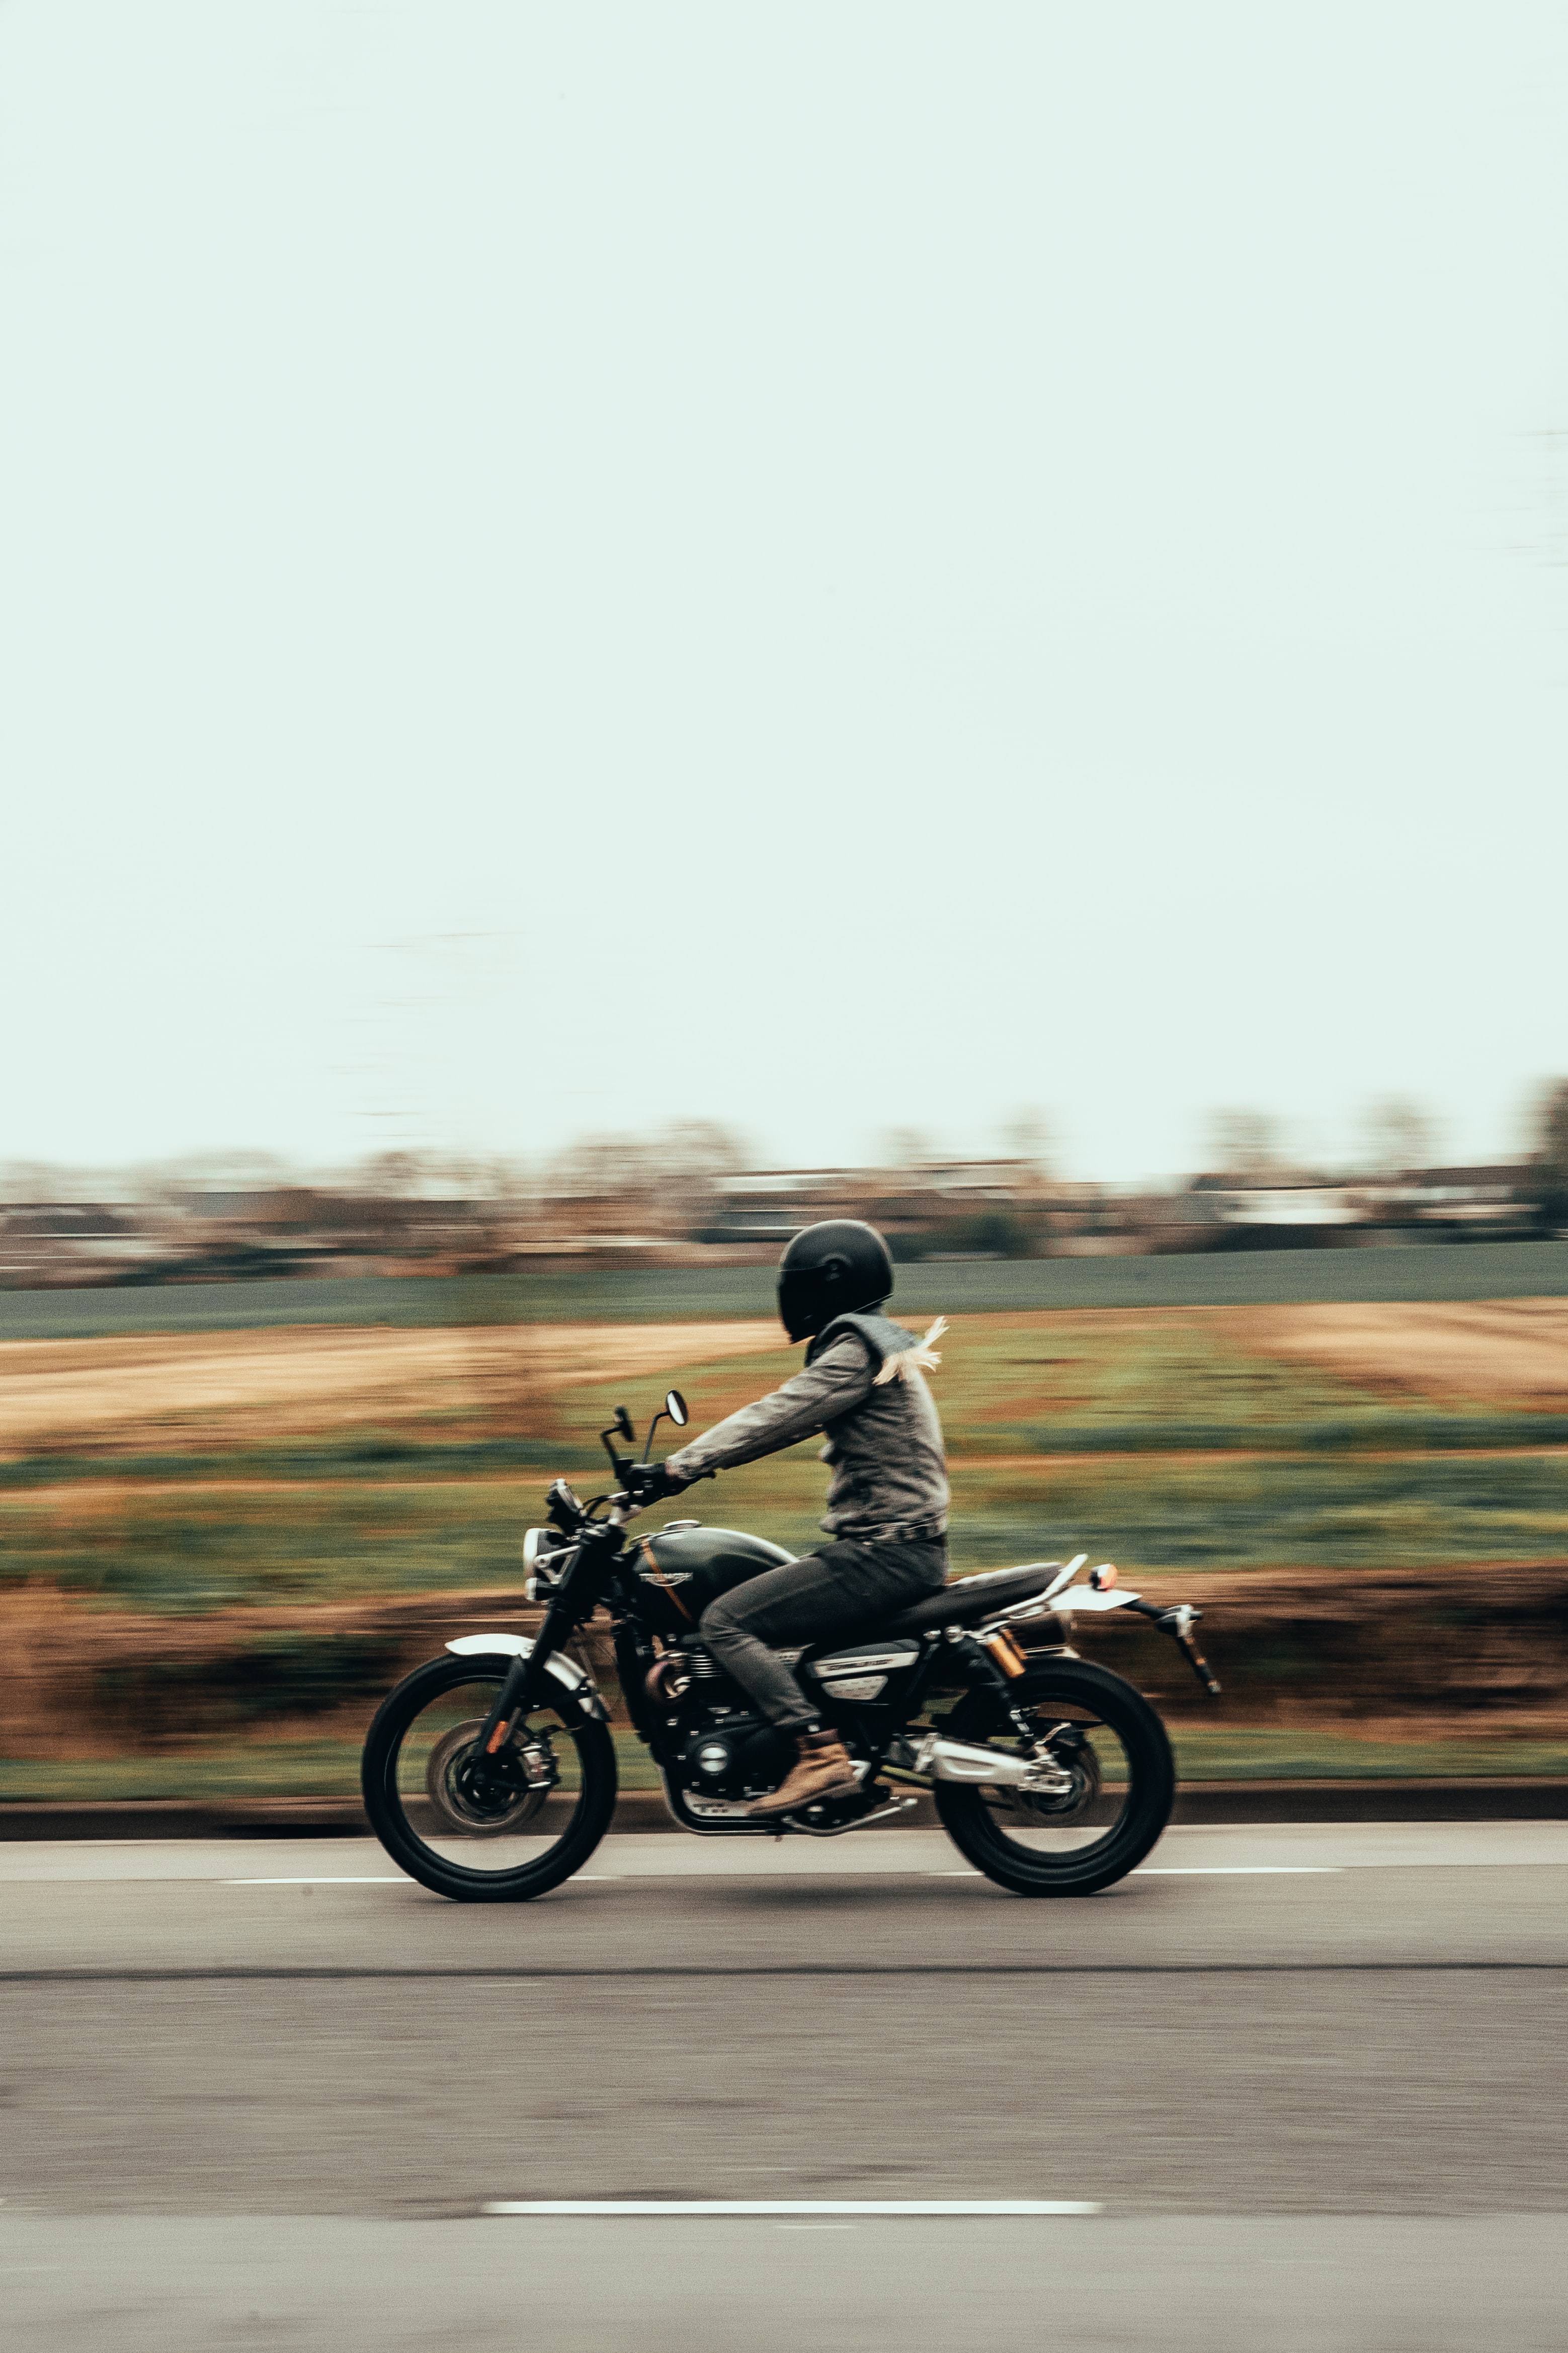 helmet, motorcycles, traffic, movement, motorcycle UHD